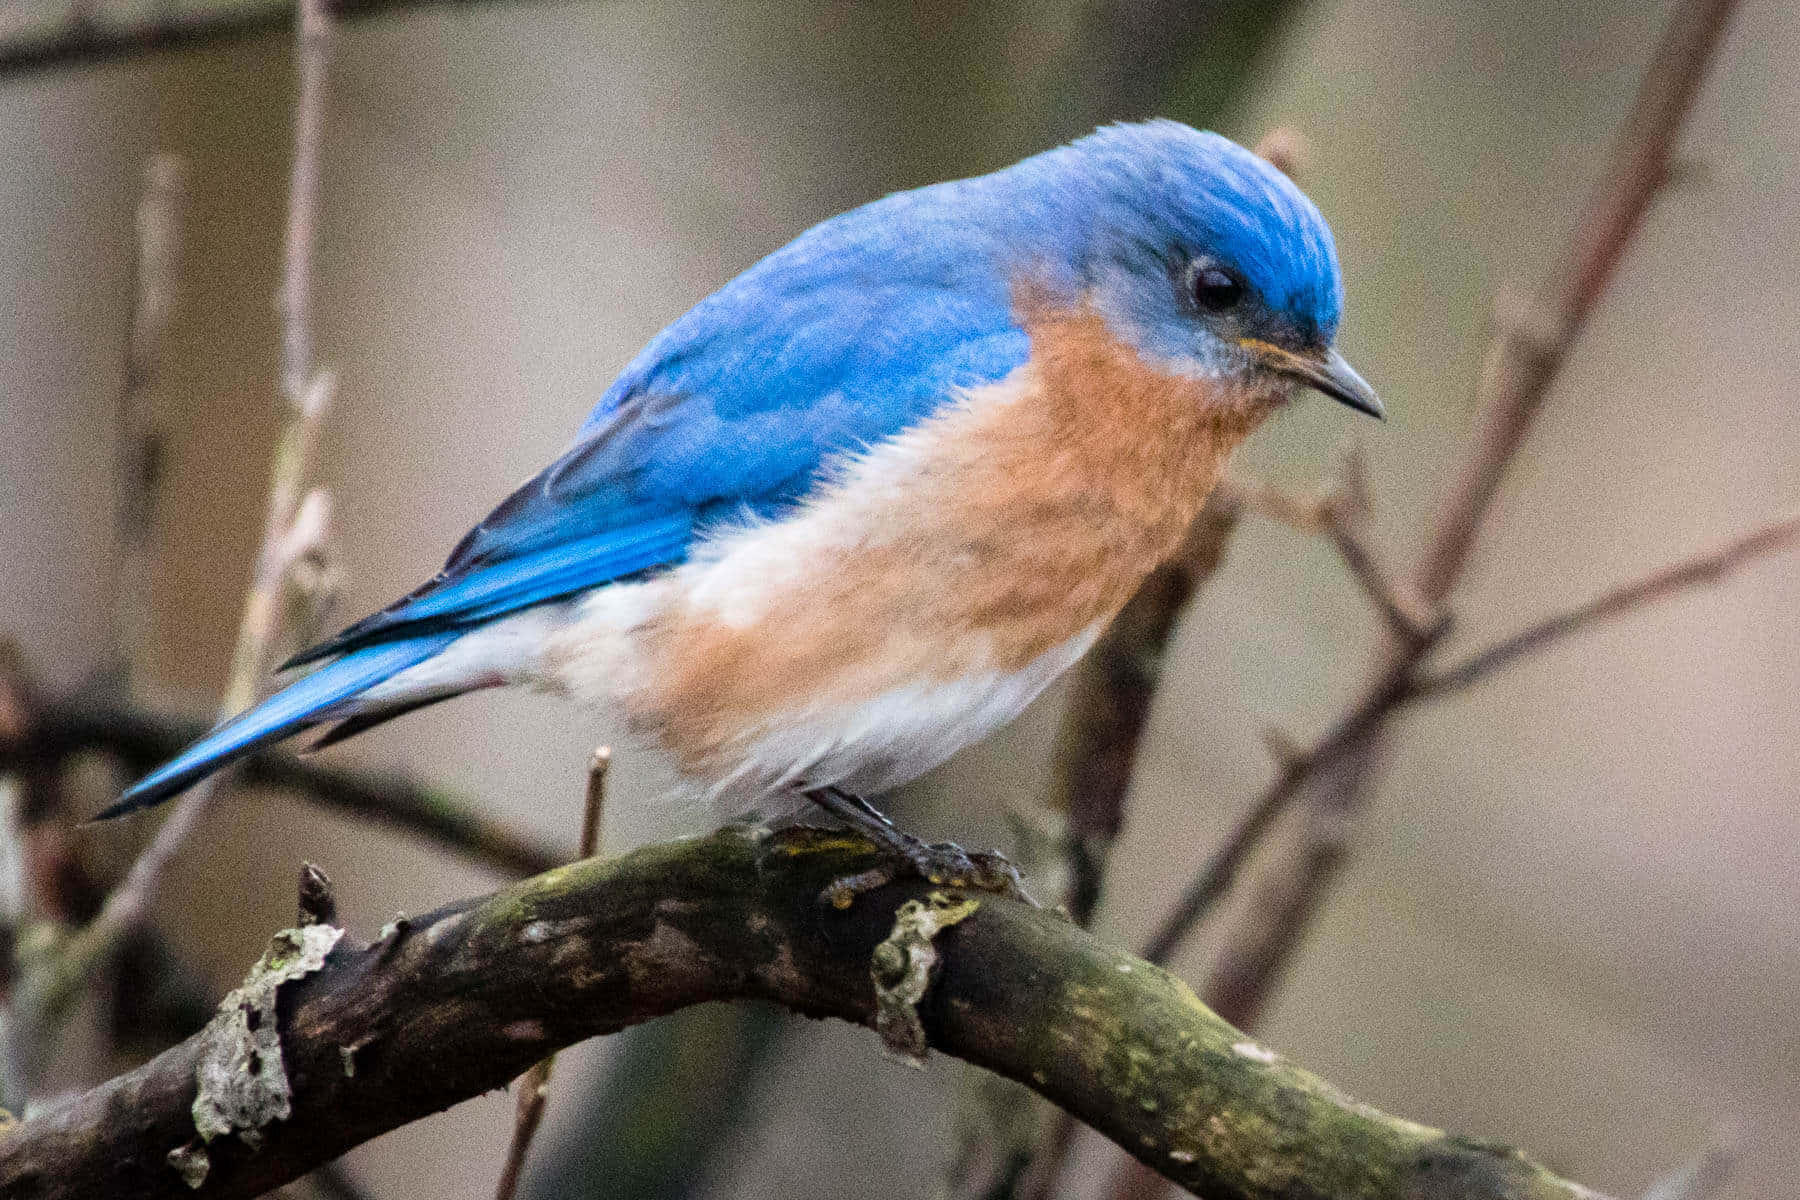 A beautiful blue bird perched atop a branch